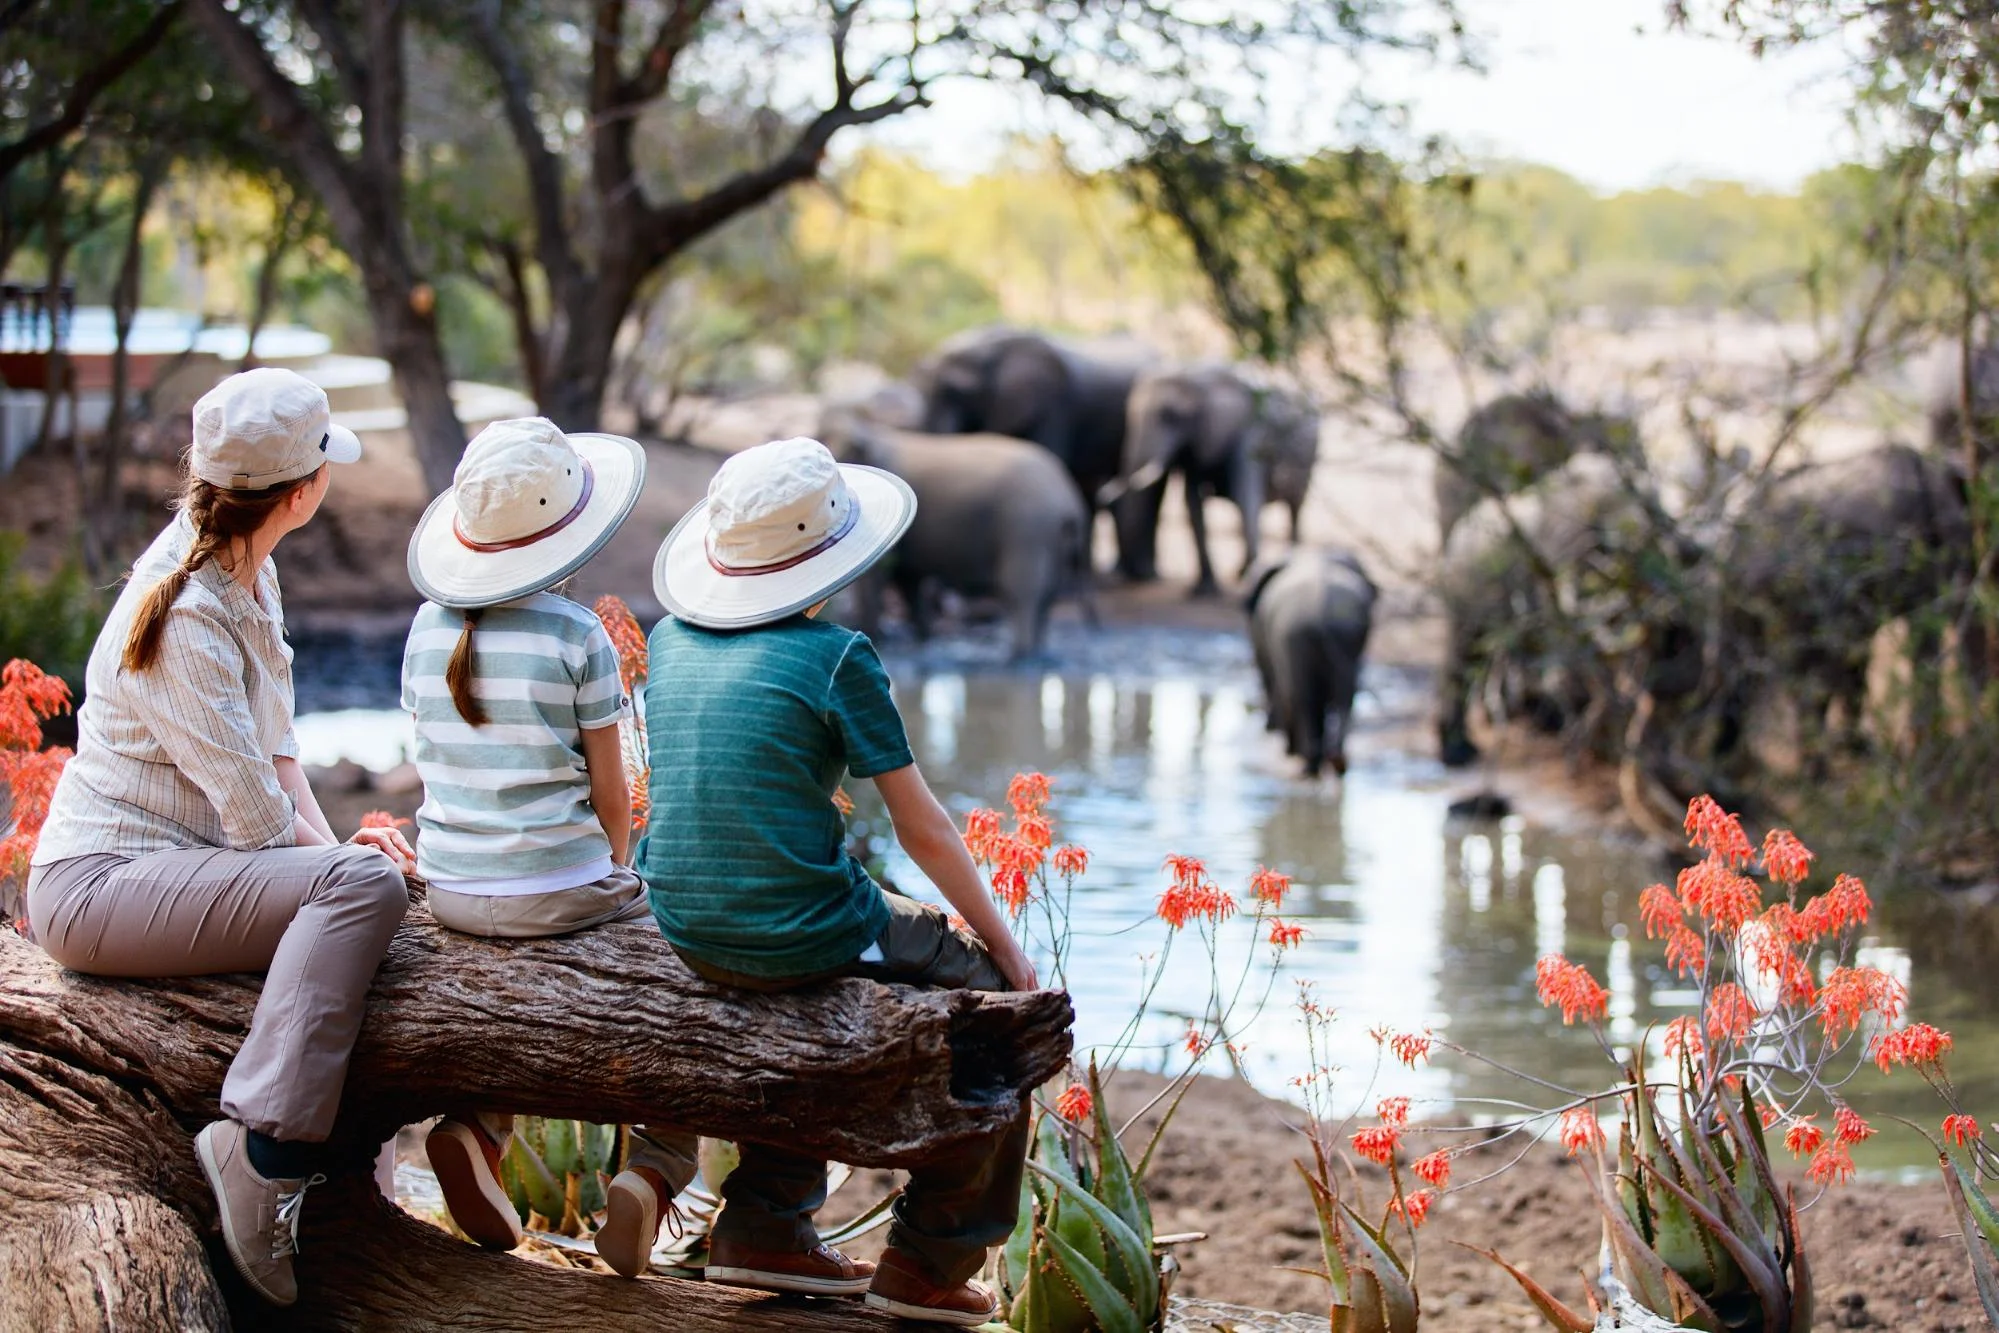 Luxury safari holidays in Africa